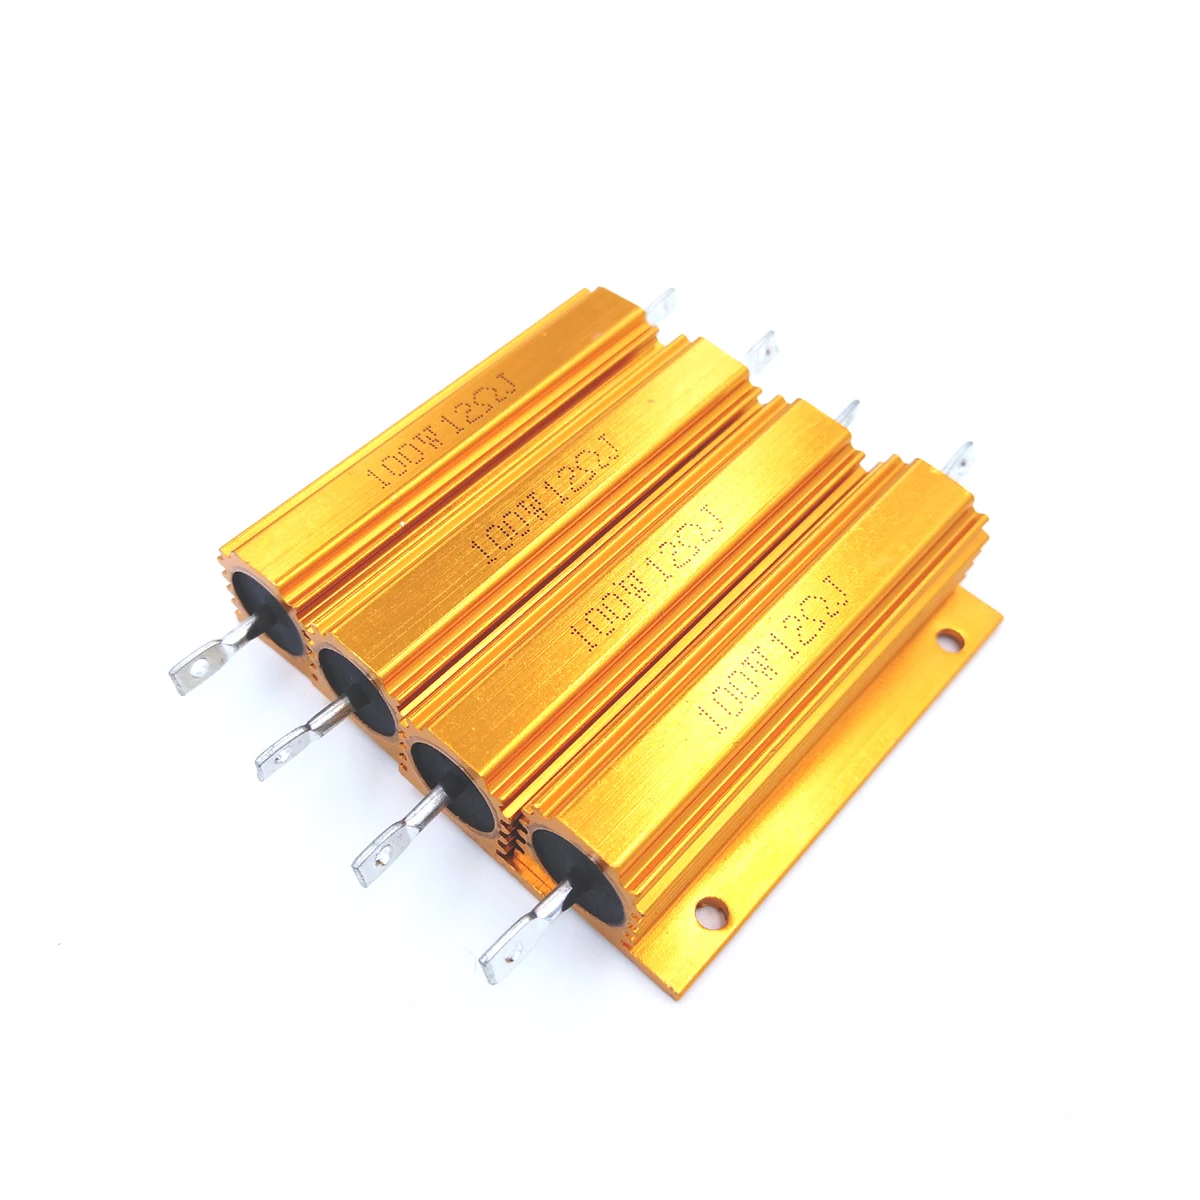 

15R 15ohm 15 0.025R 0.025ohm 0.025 R Ohm 100W Watt Aluminum Wirewound Power Metal Shell Case Resistor Resistance RX24